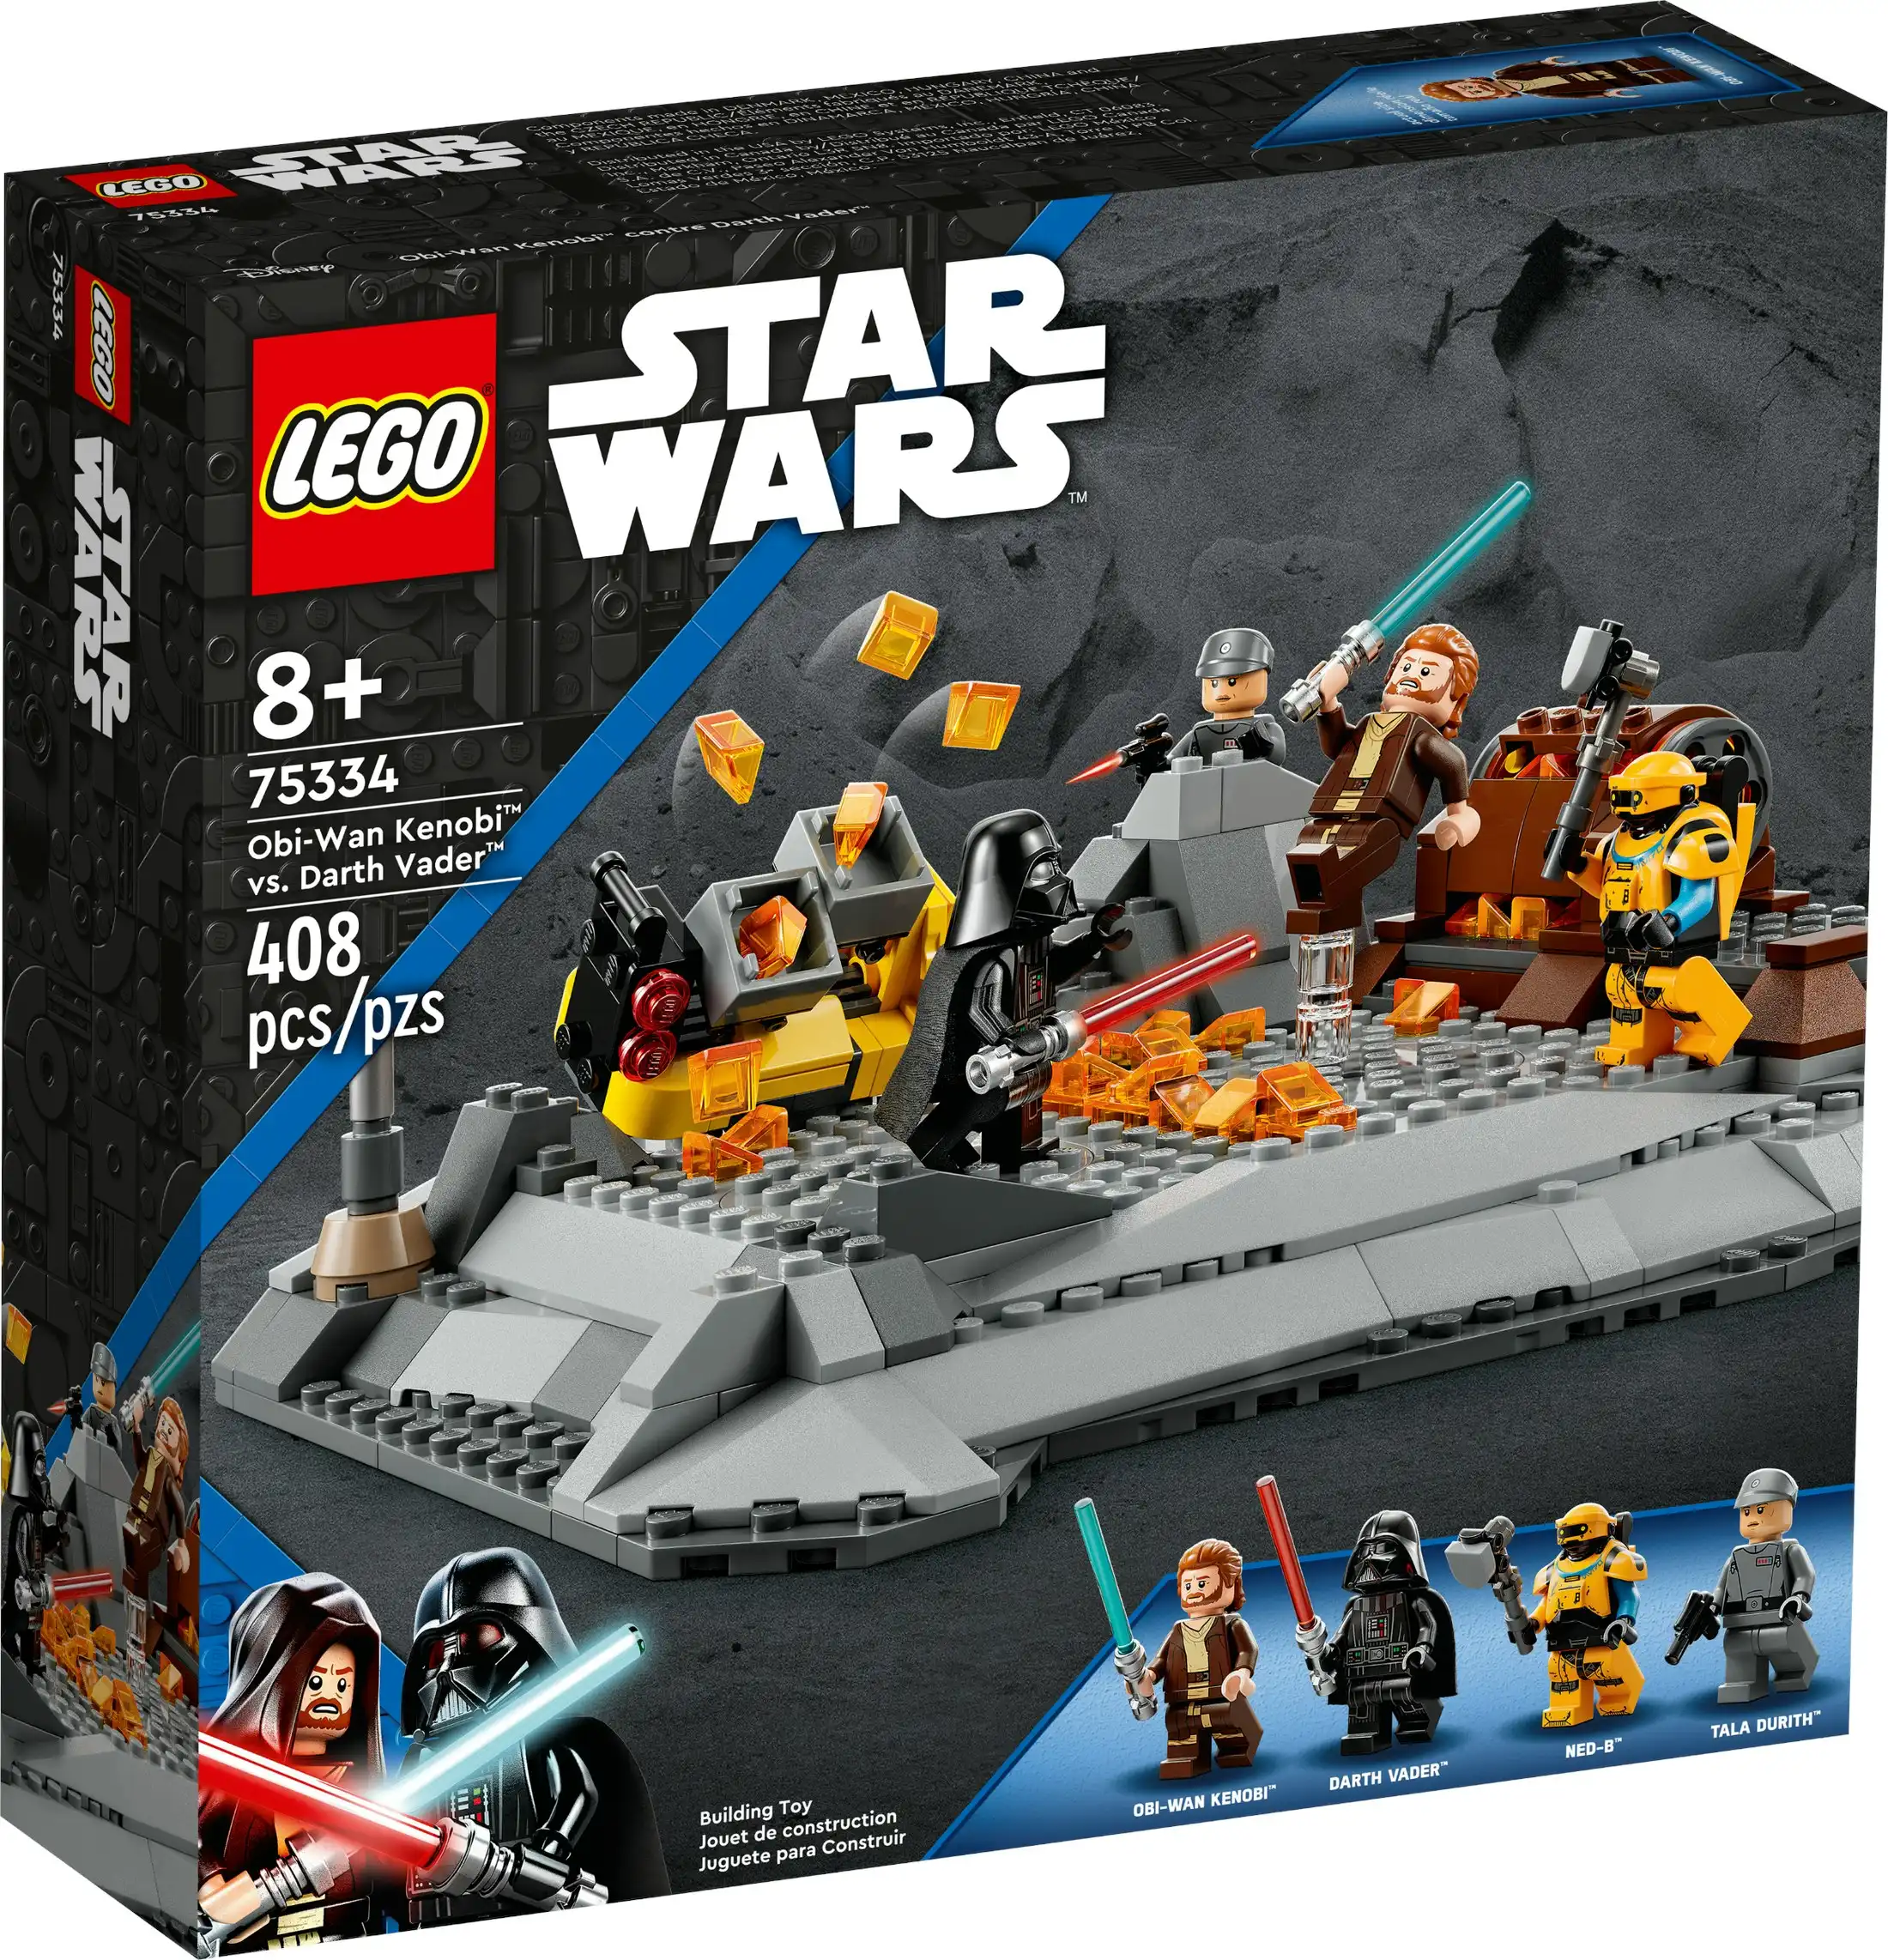 LEGO 75334 Obi-Wan Kenobi vs. Darth Vader - Star Wars